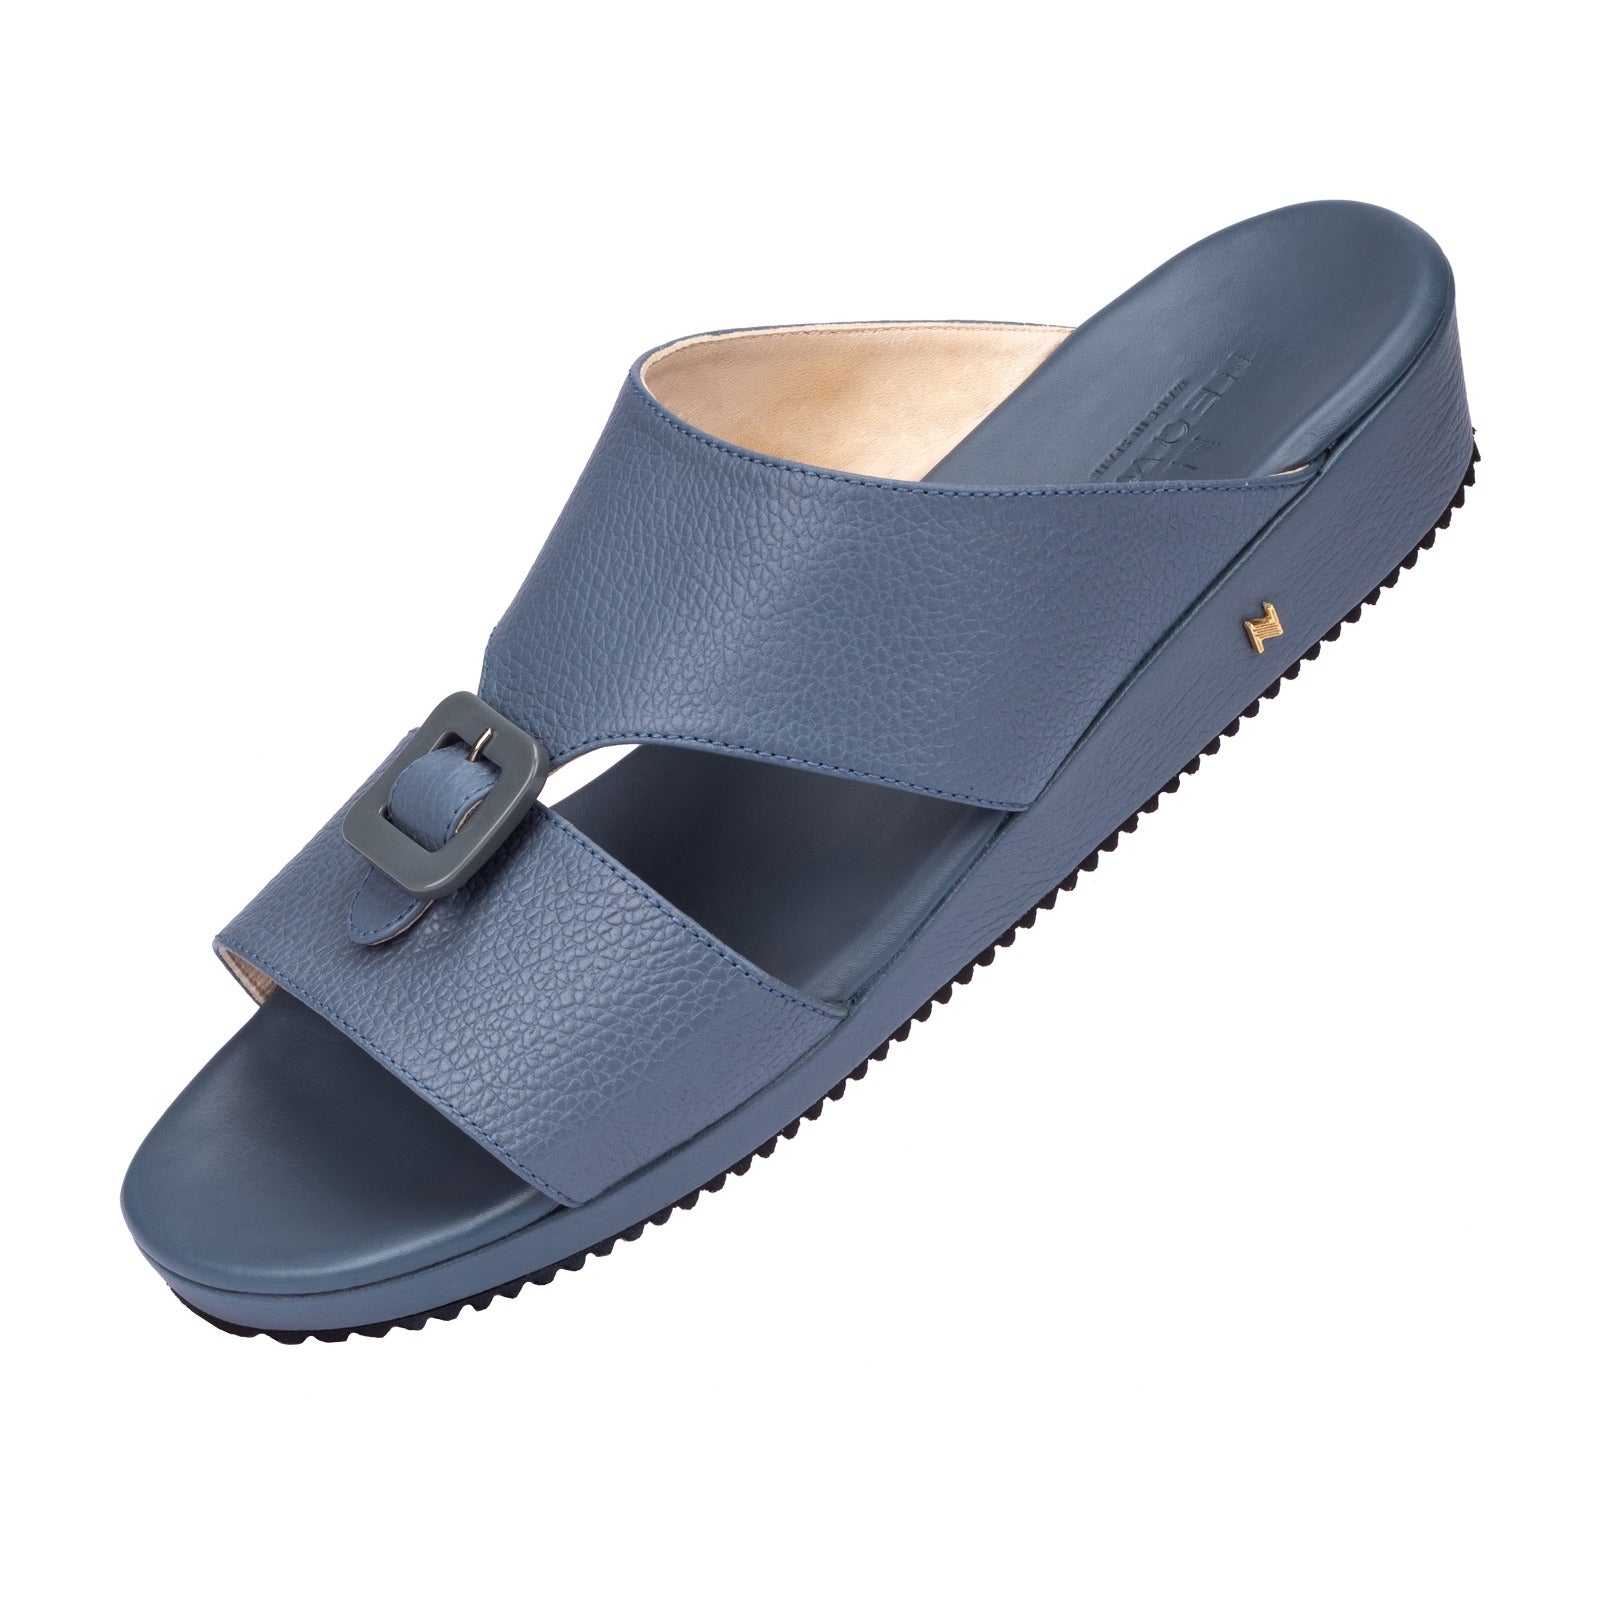 Neqwa CÓRDOBA Jute Collection Sandals - Steel Blue Calfskin Leather